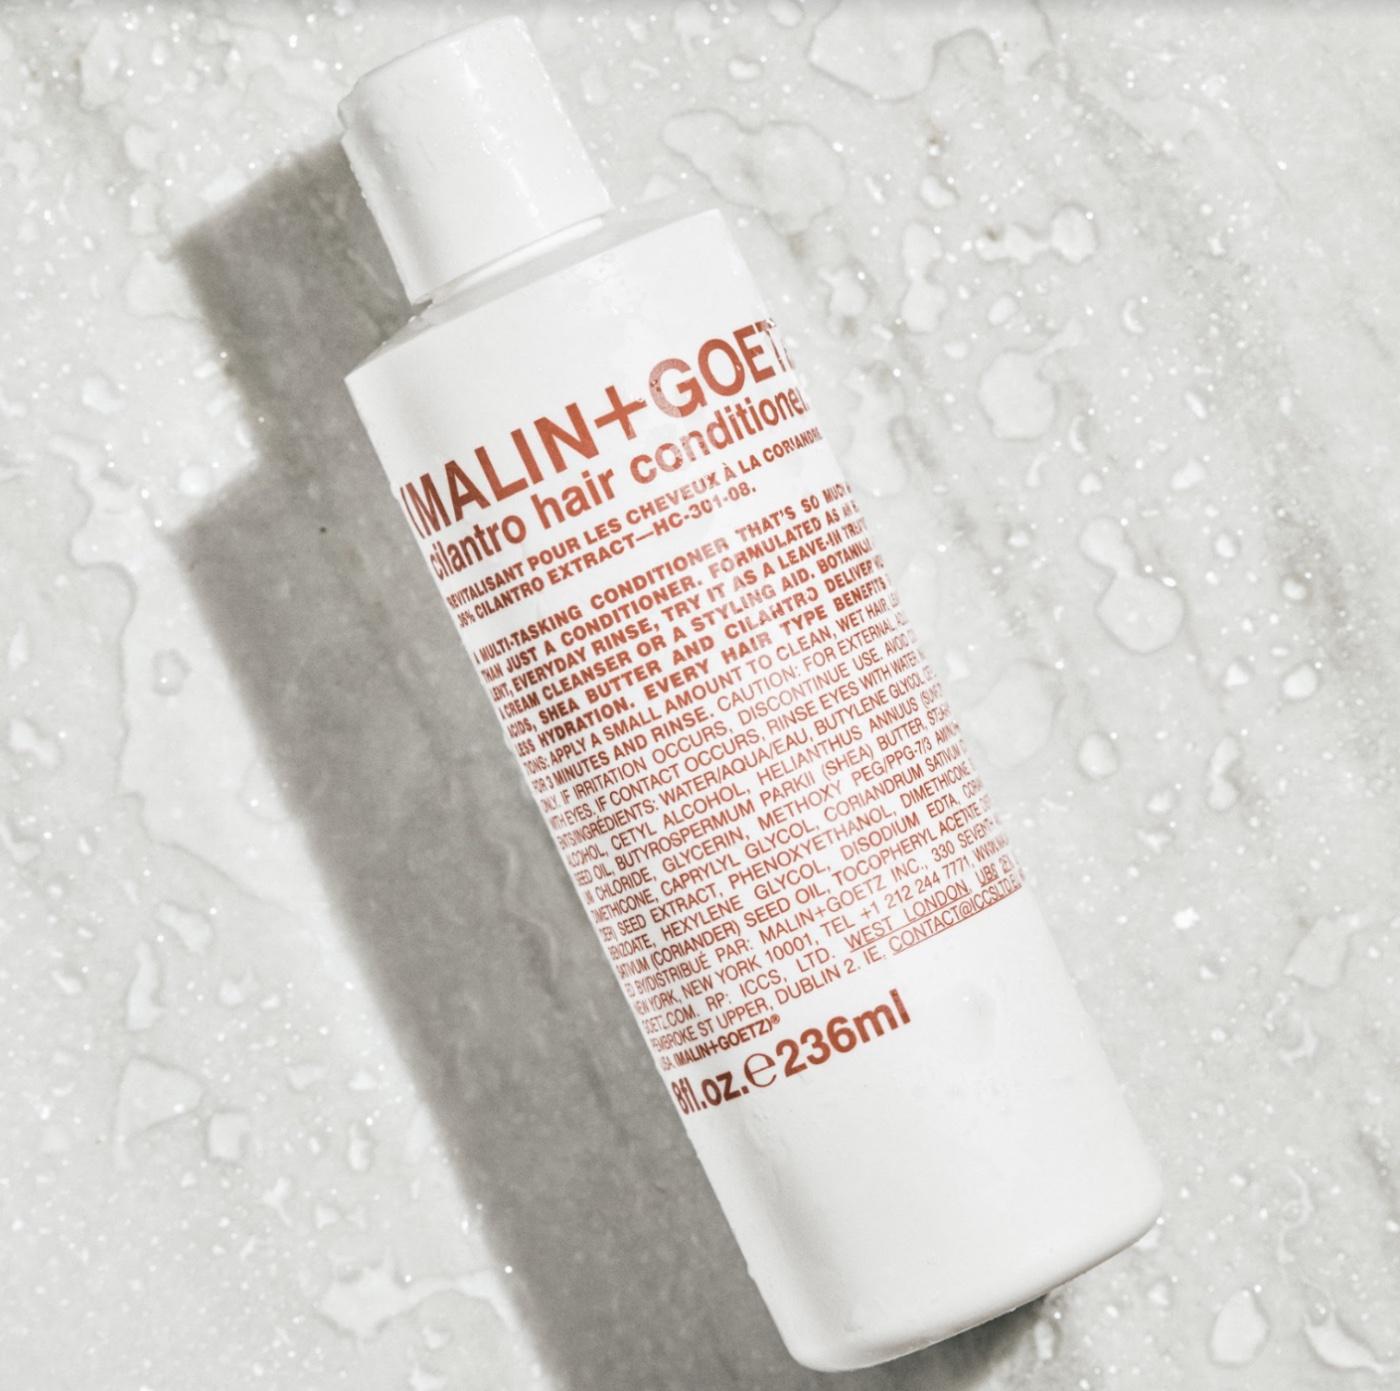 Malin + Goetz - cilantro hair conditioner | Perfume Lounge